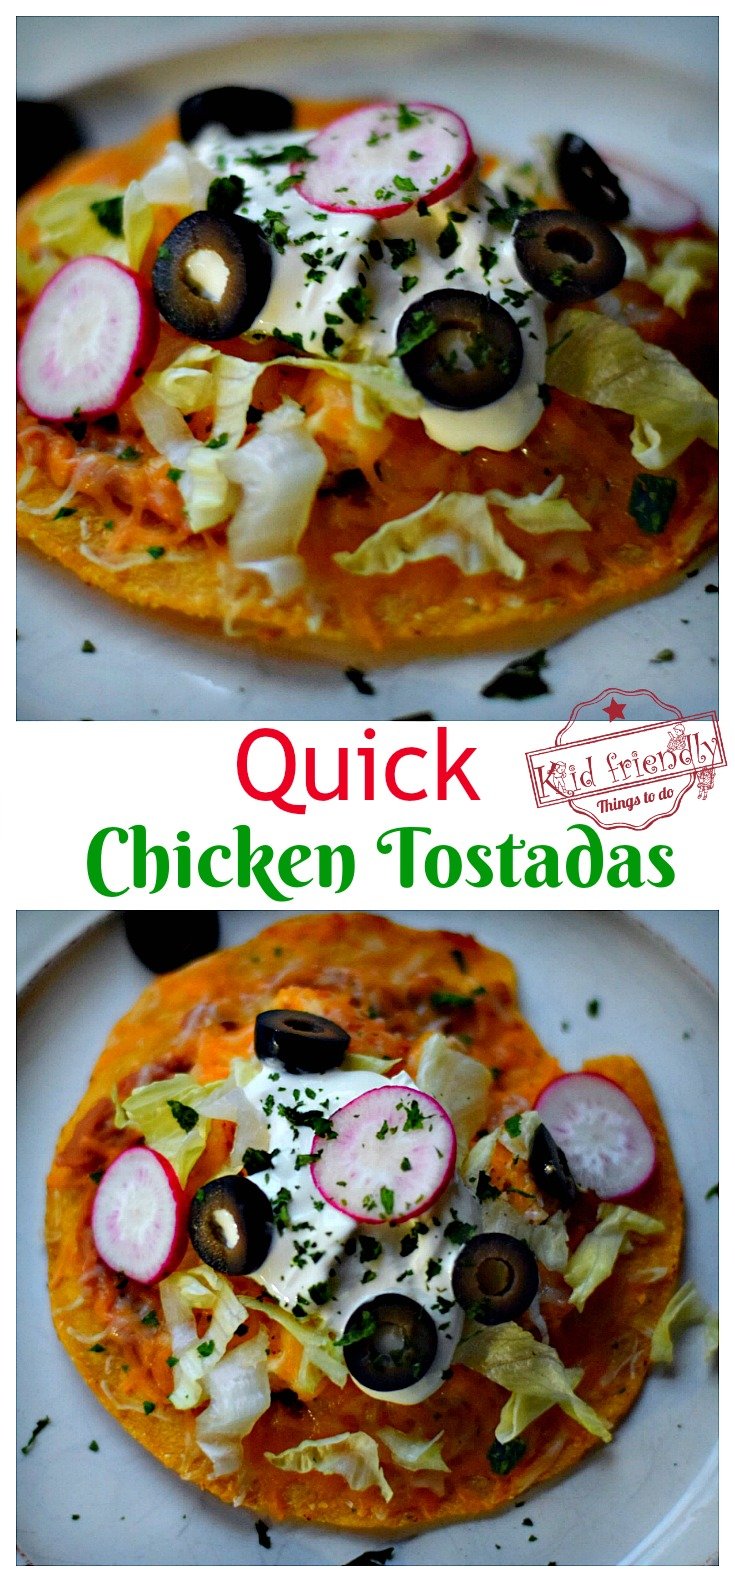 Quick Chicken Tostadas - An Easy Mexican Food Recipe